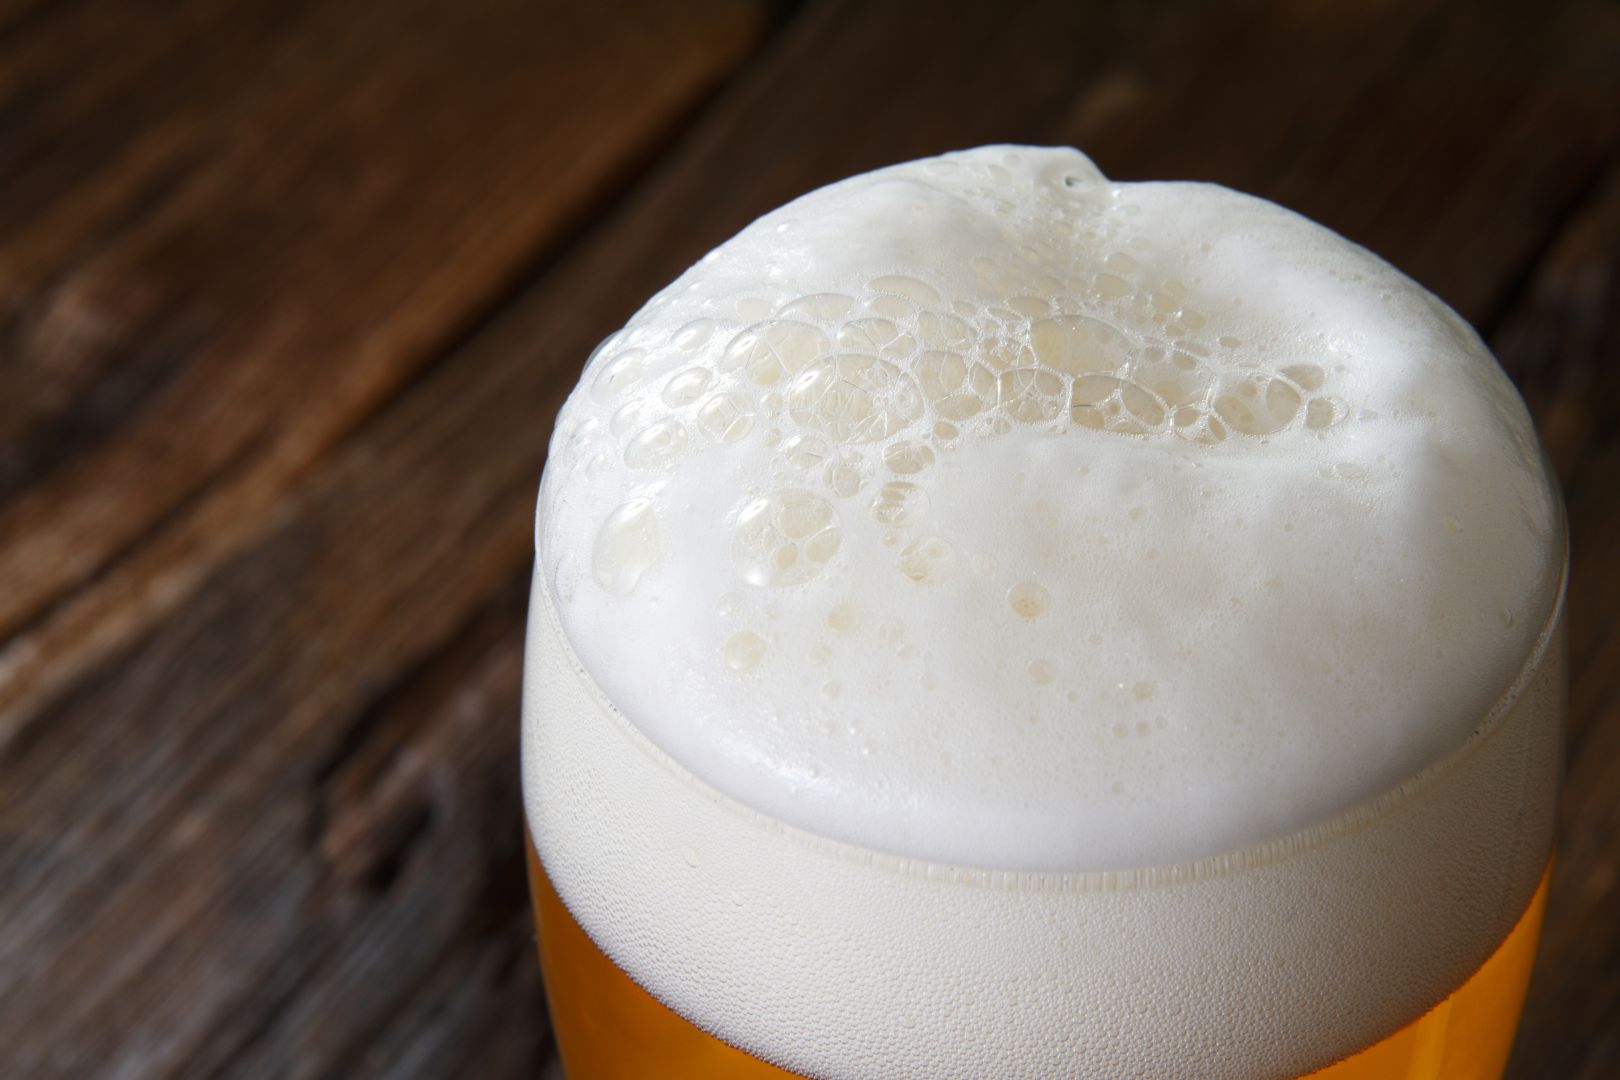 Poptávka na dlouhodobý dodavatel piva k výčepu (Nápoje - alko) - Zlín